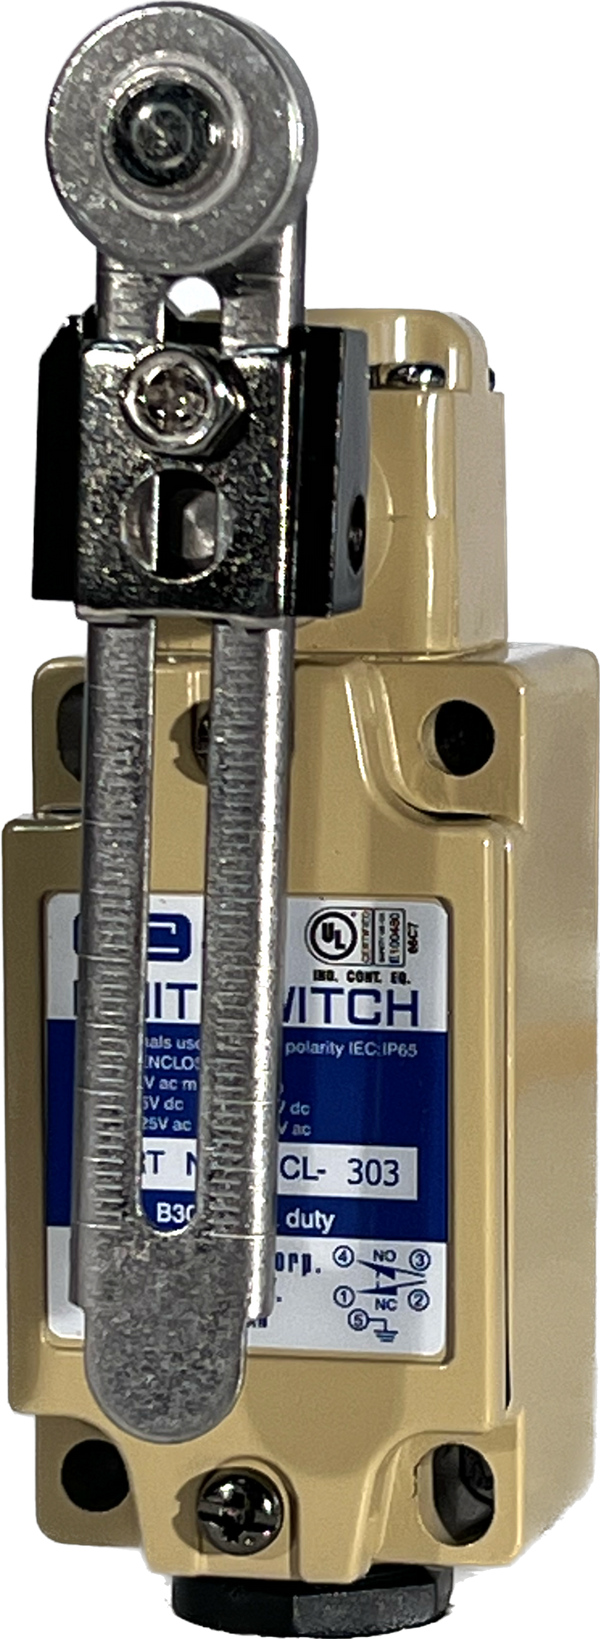 RCL-303 Precision Oil Tight Limit Switch